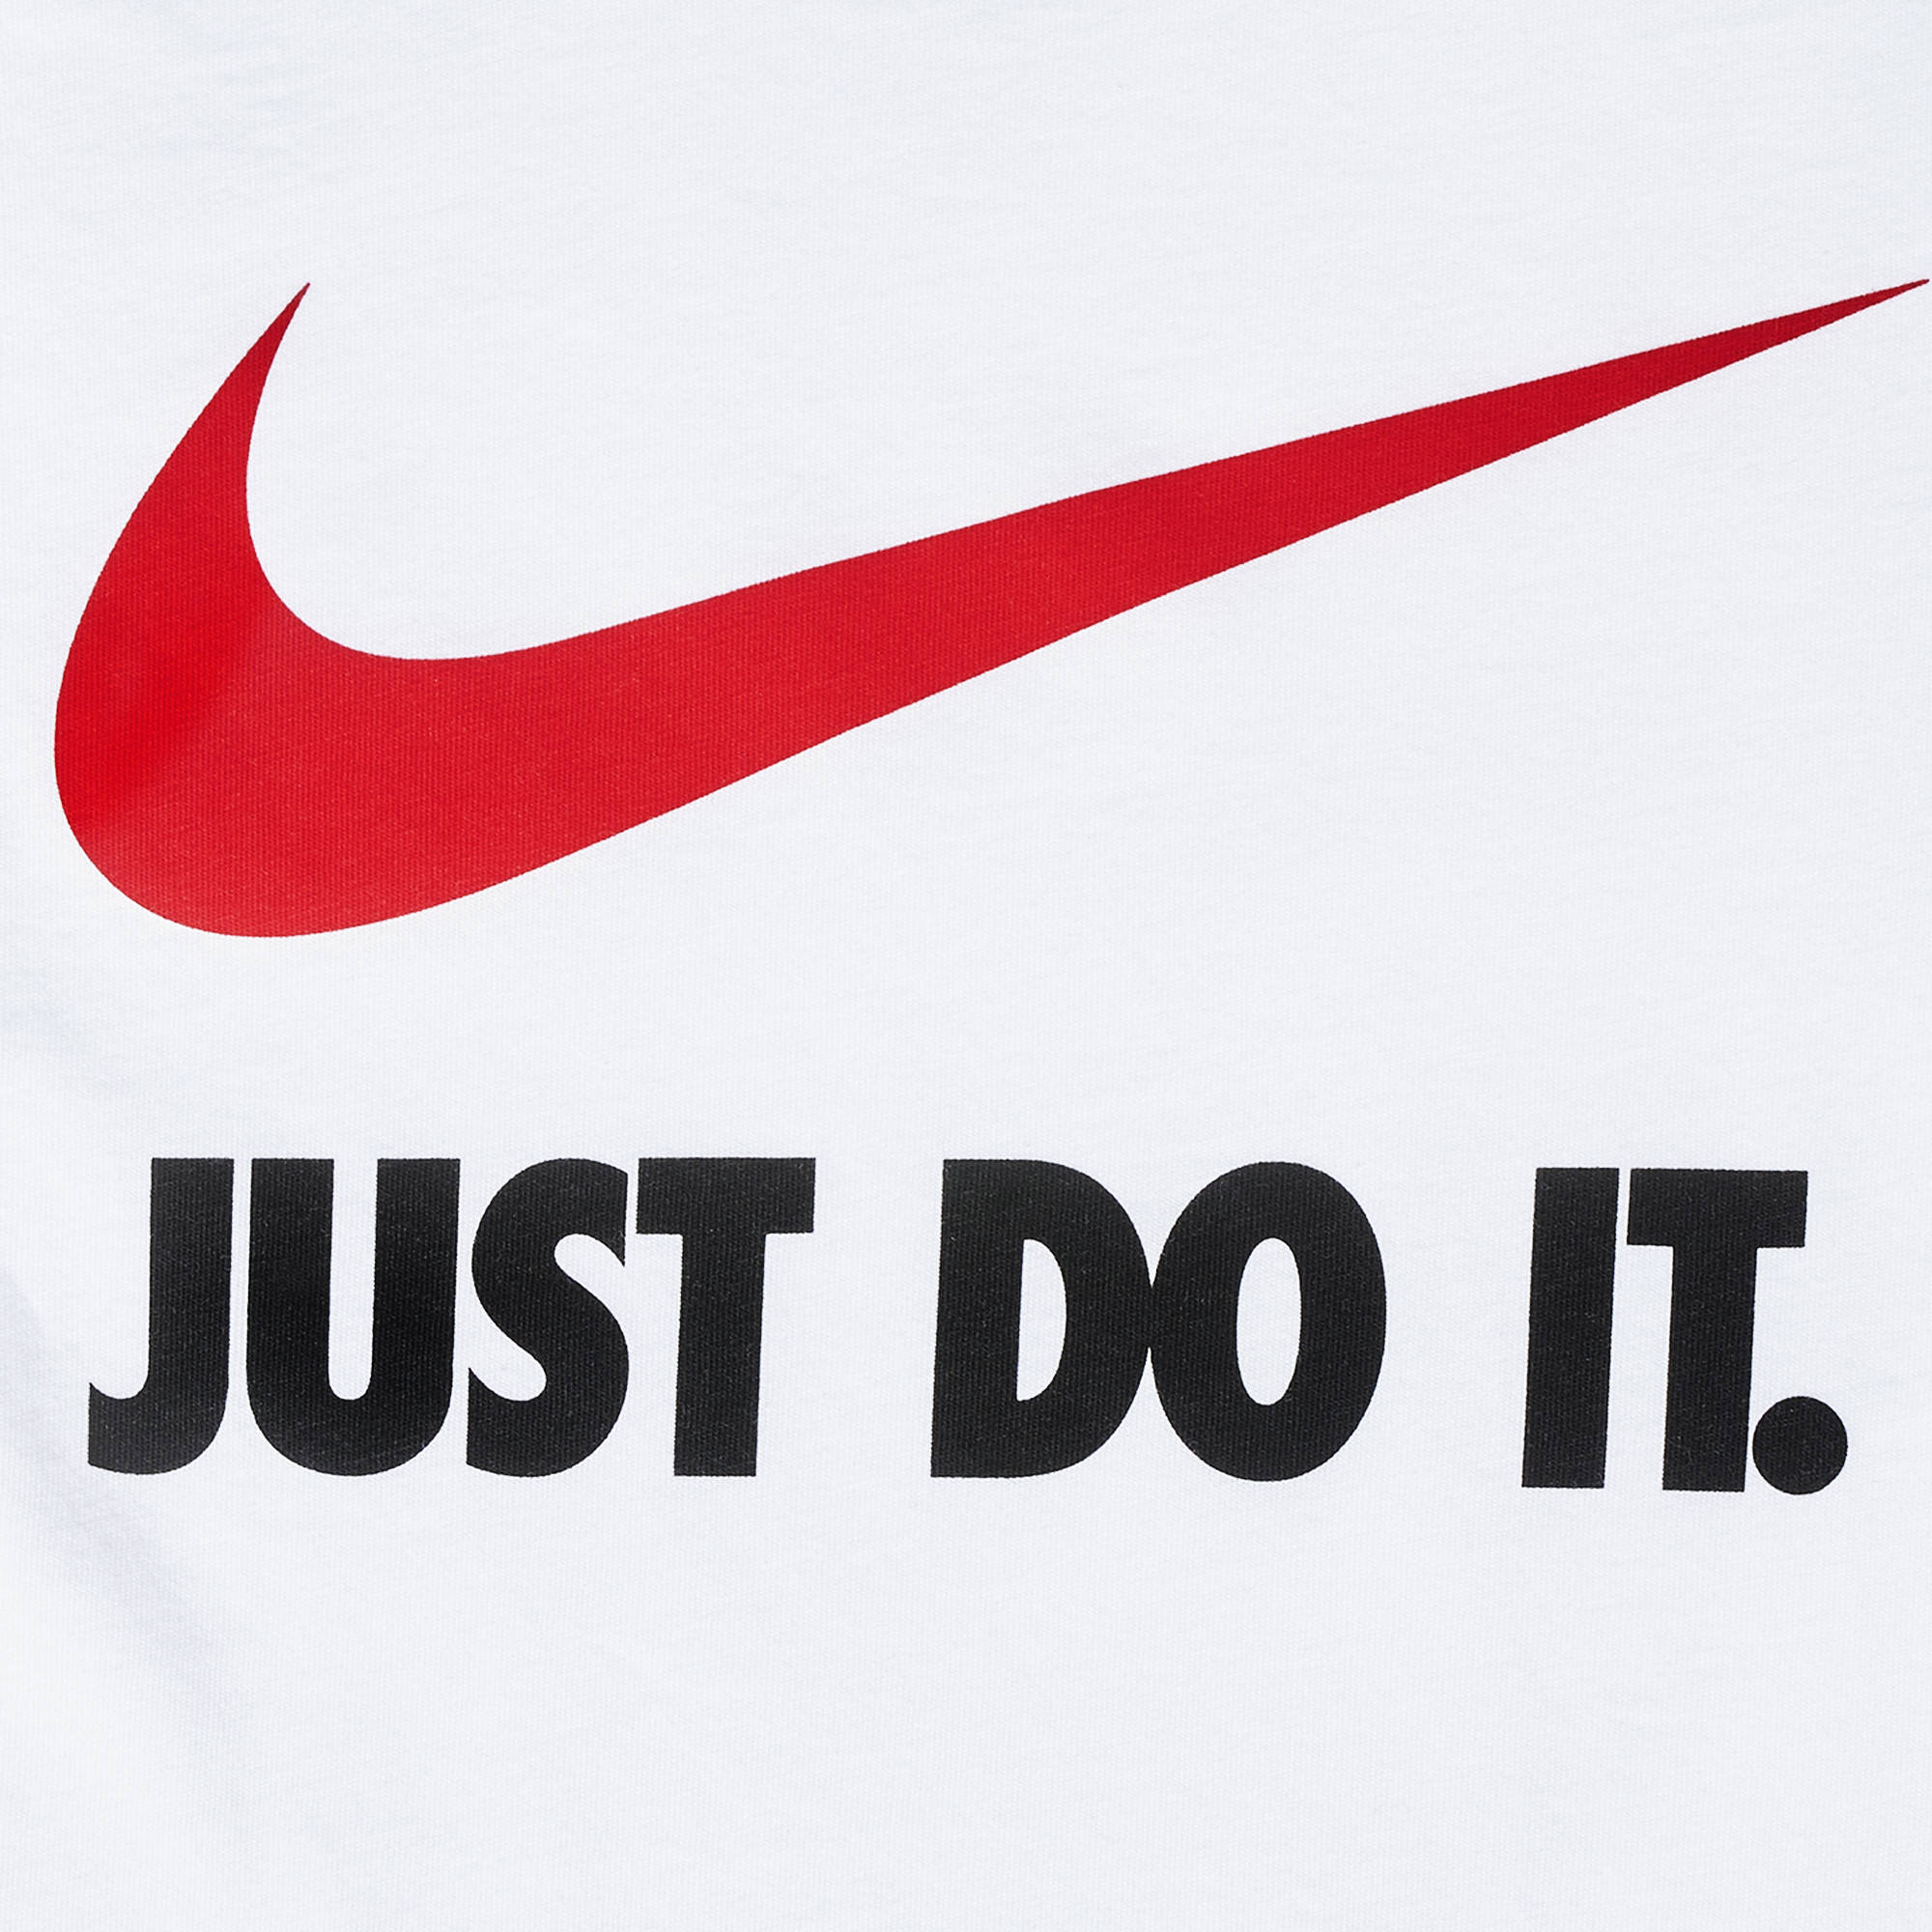 Just do it game. Найк Джаст Ду ИТ. Логотип Nike just do it. Слоган найк just do it. Слоган найк just do.